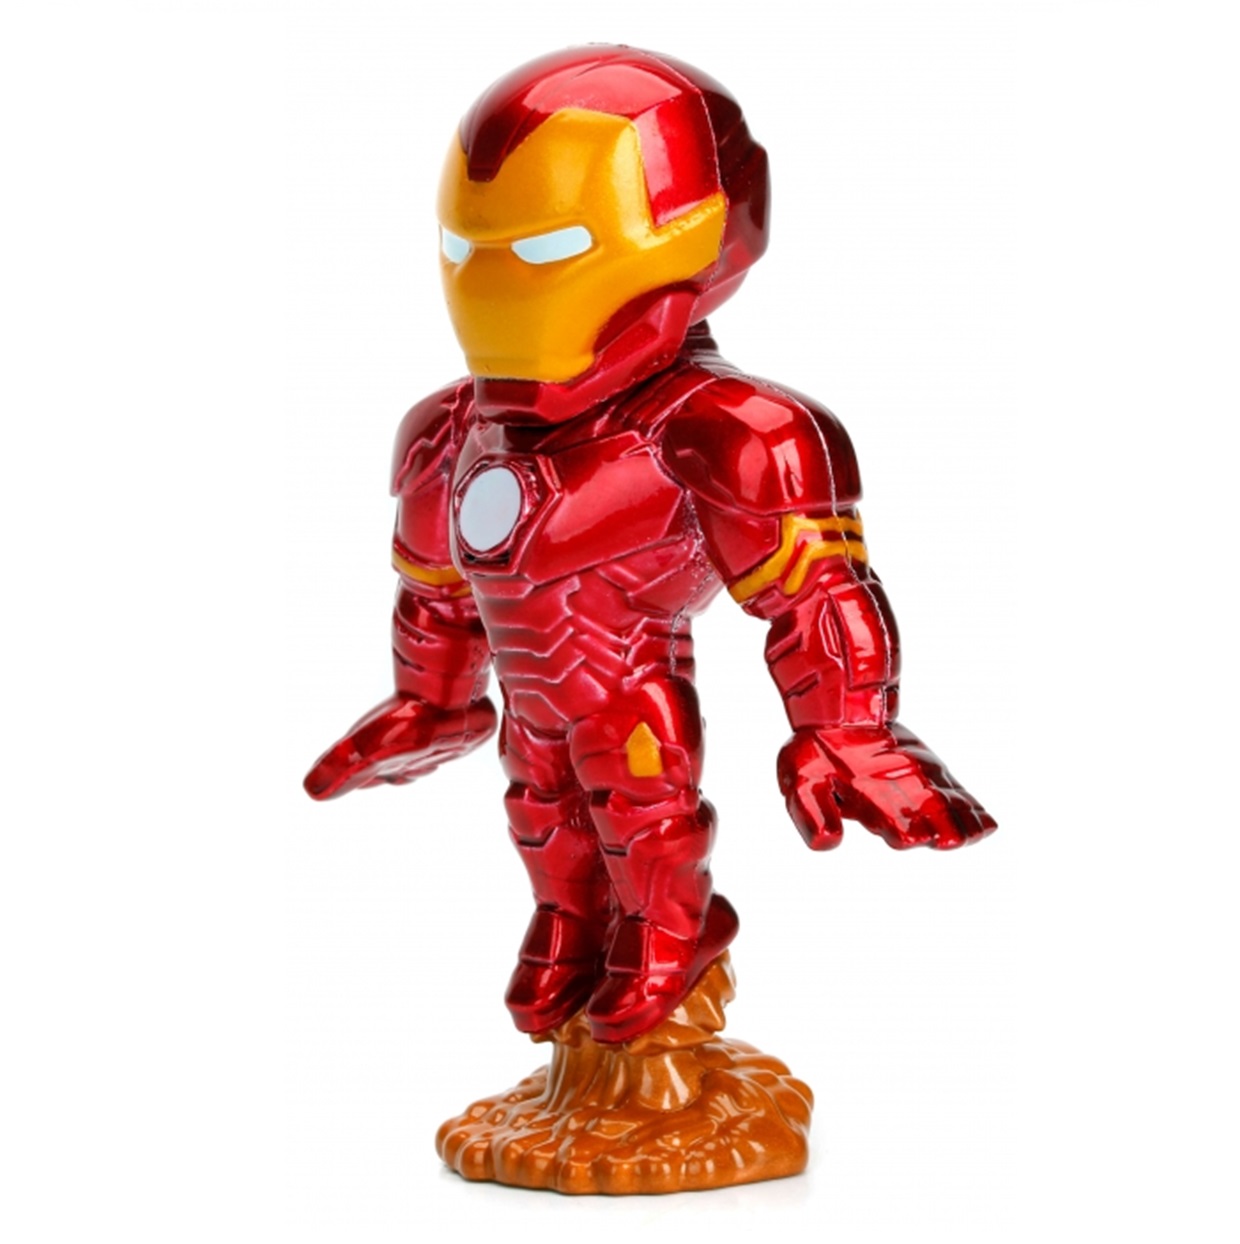 Iron Man M501 Figura Marvel Avengers Metalfigs Die Cast 2.5 